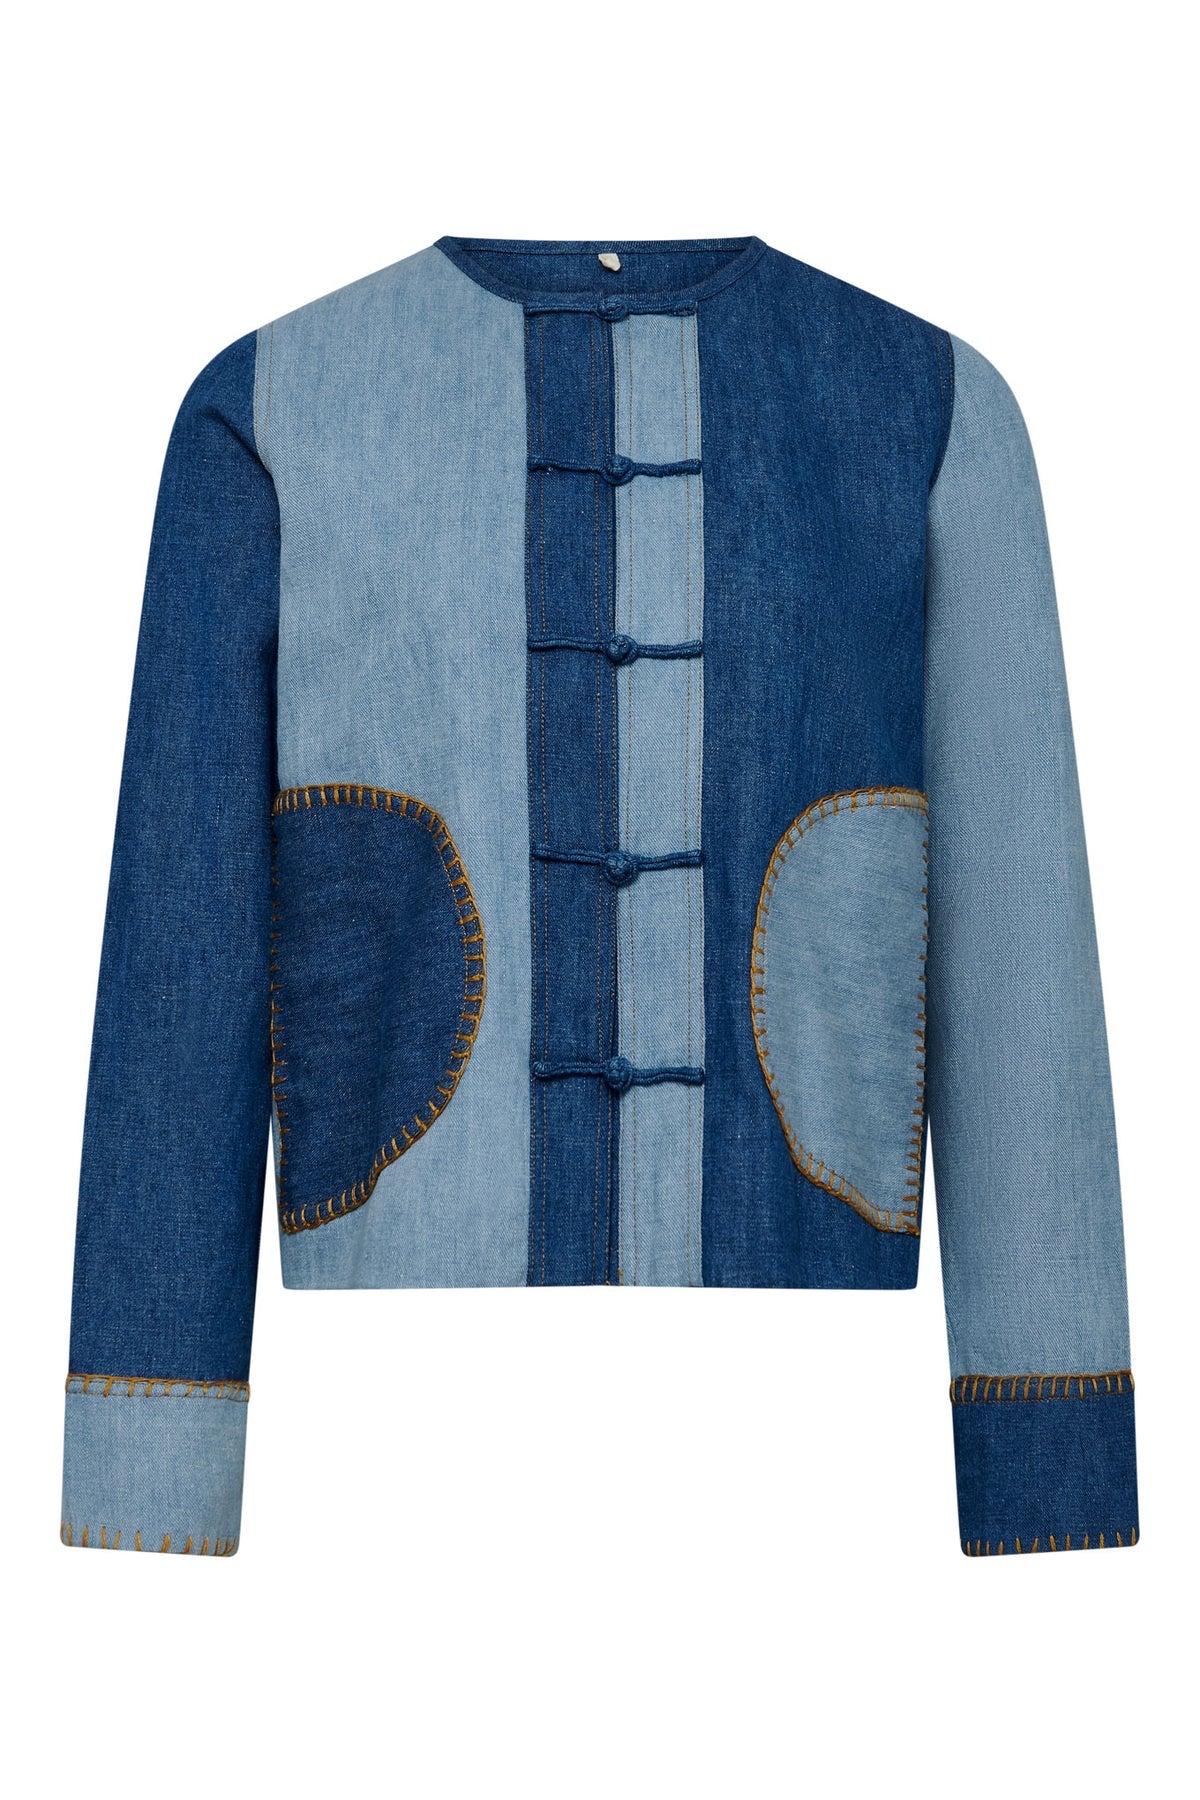 Nelly jacket - Blue patchwork